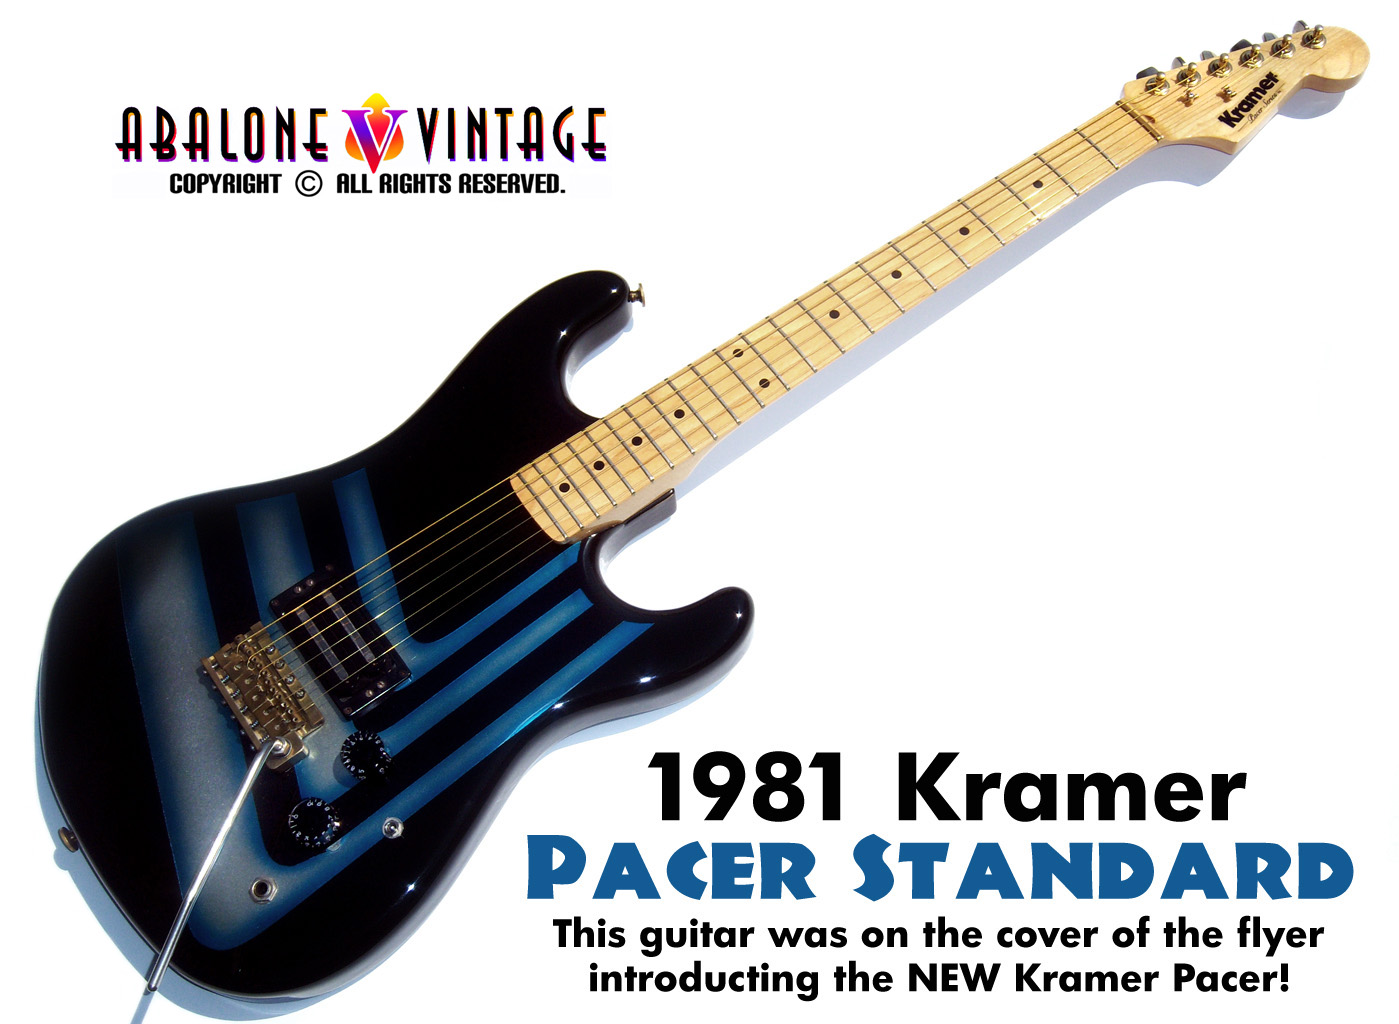 1981 Kramer Pacer Standard guitar.